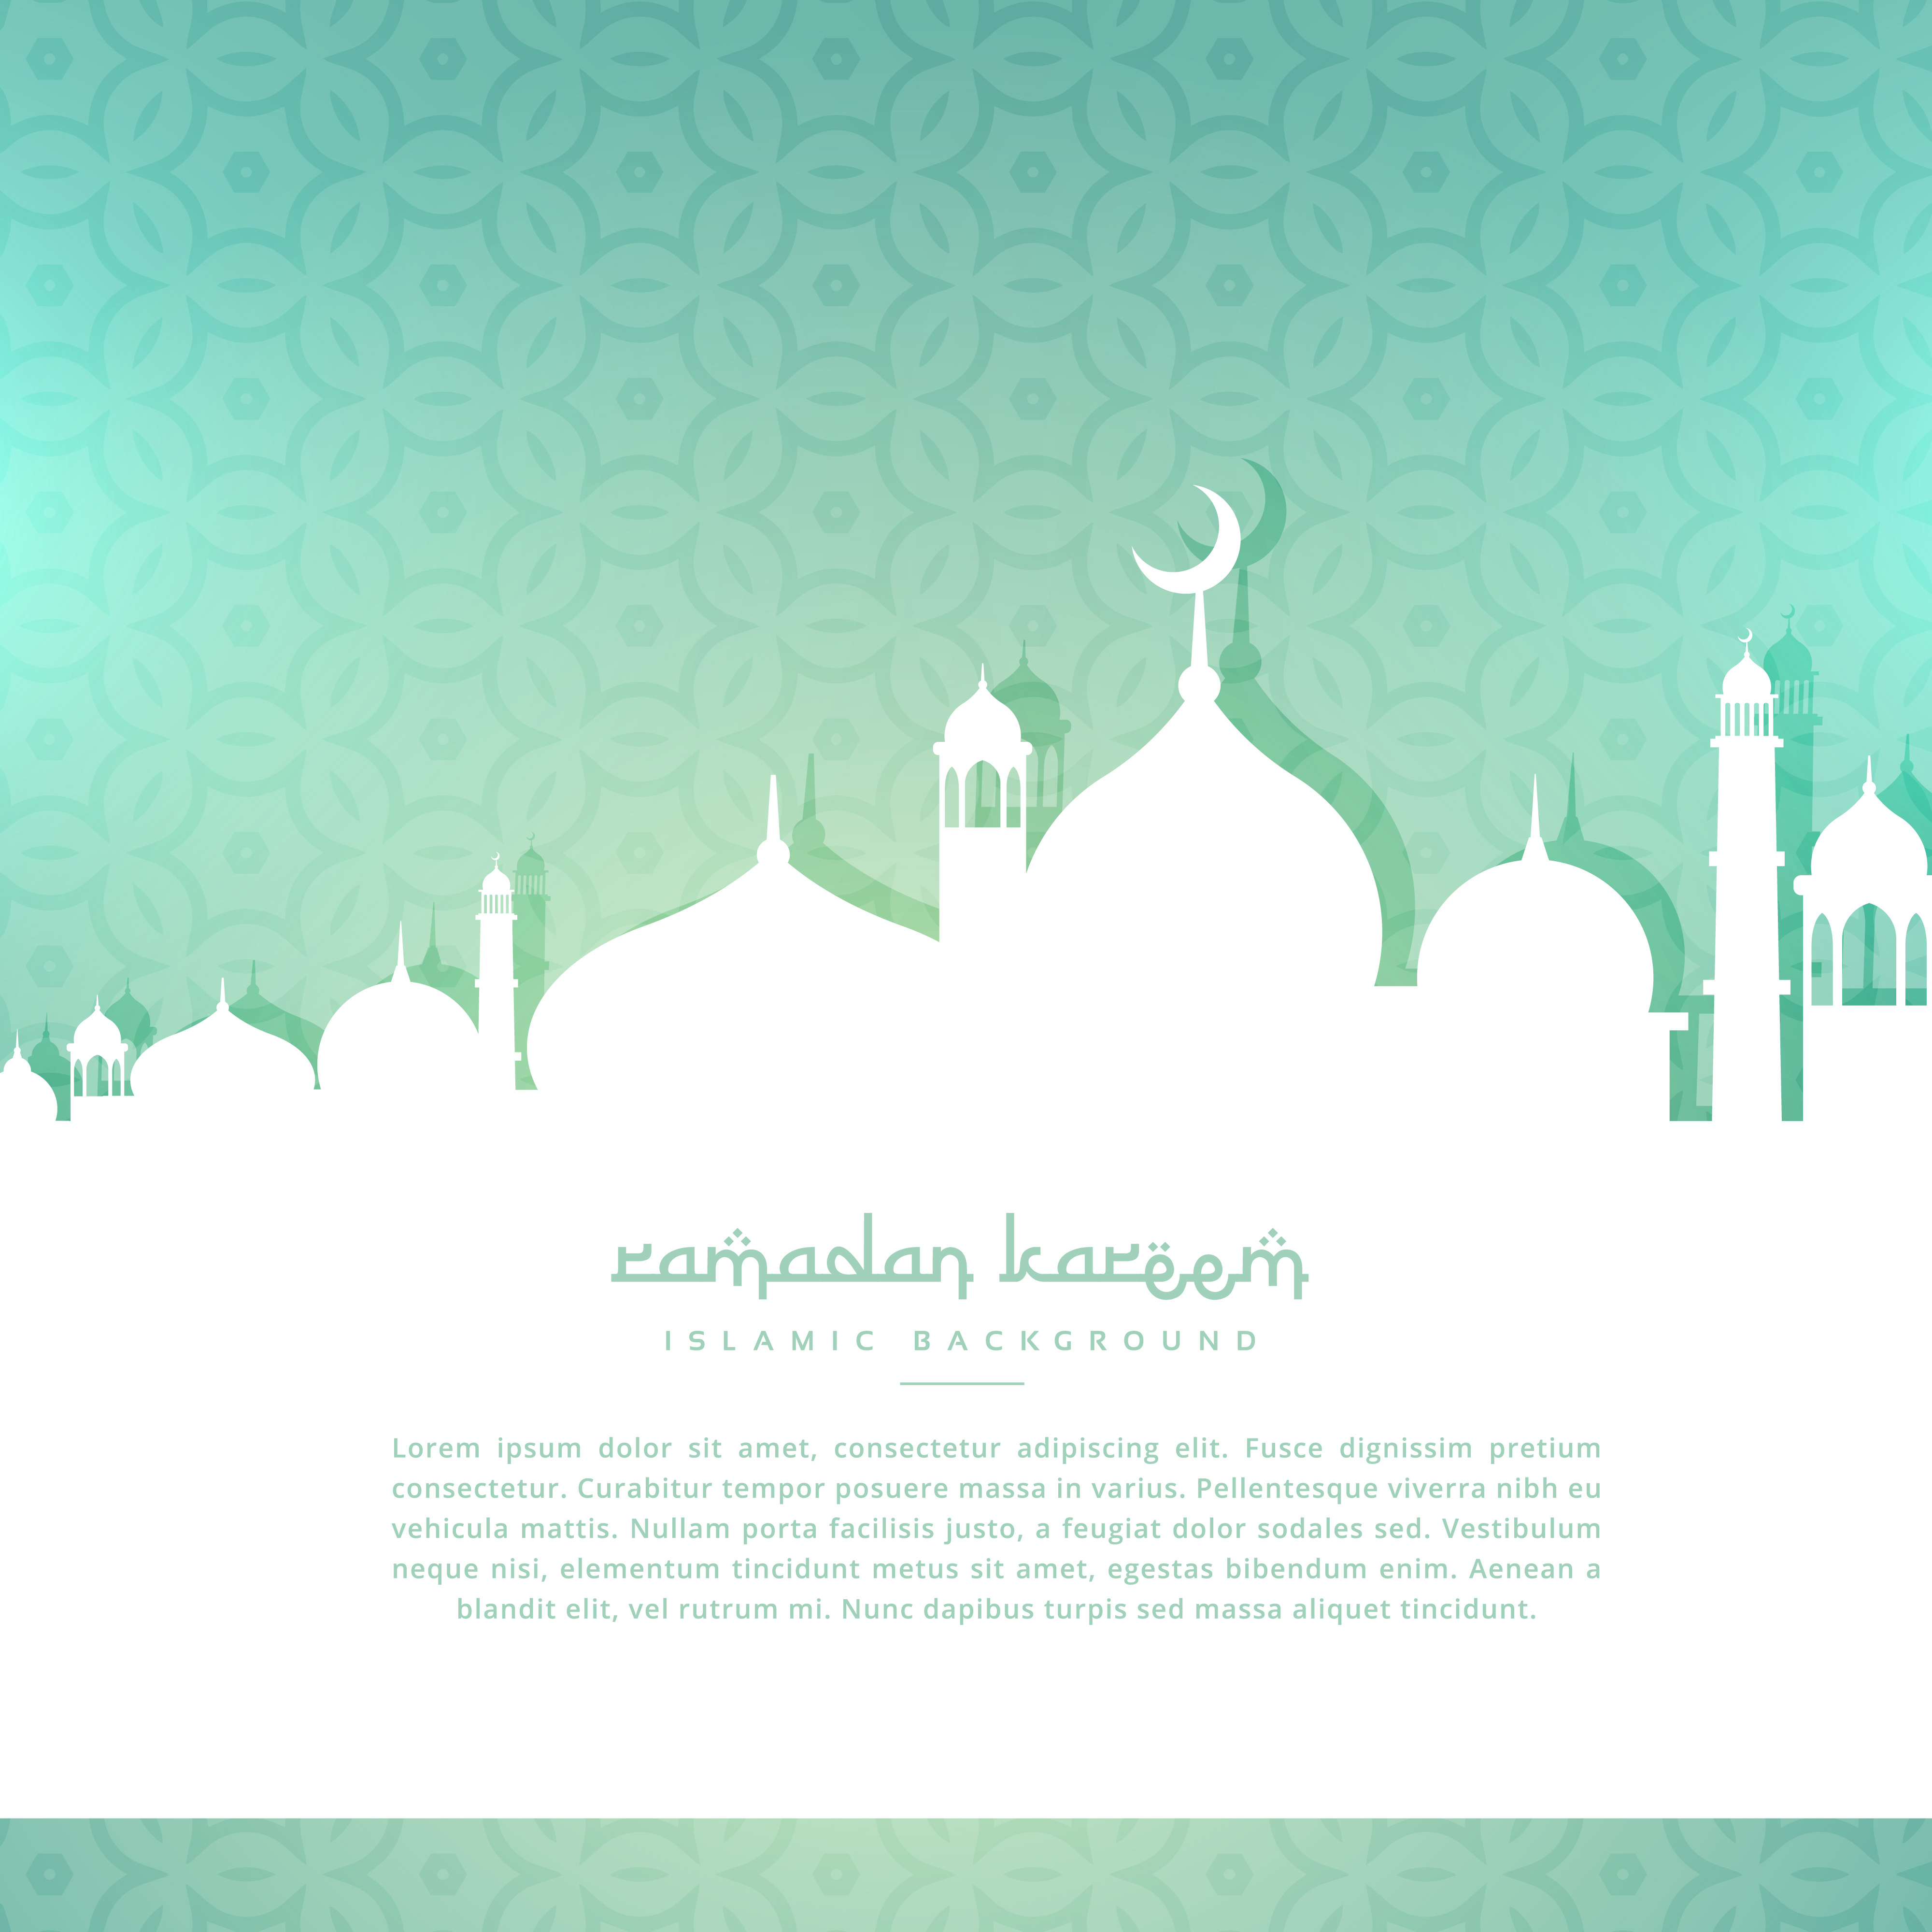 Ramadan kareem greeting background - Download Free Vector 